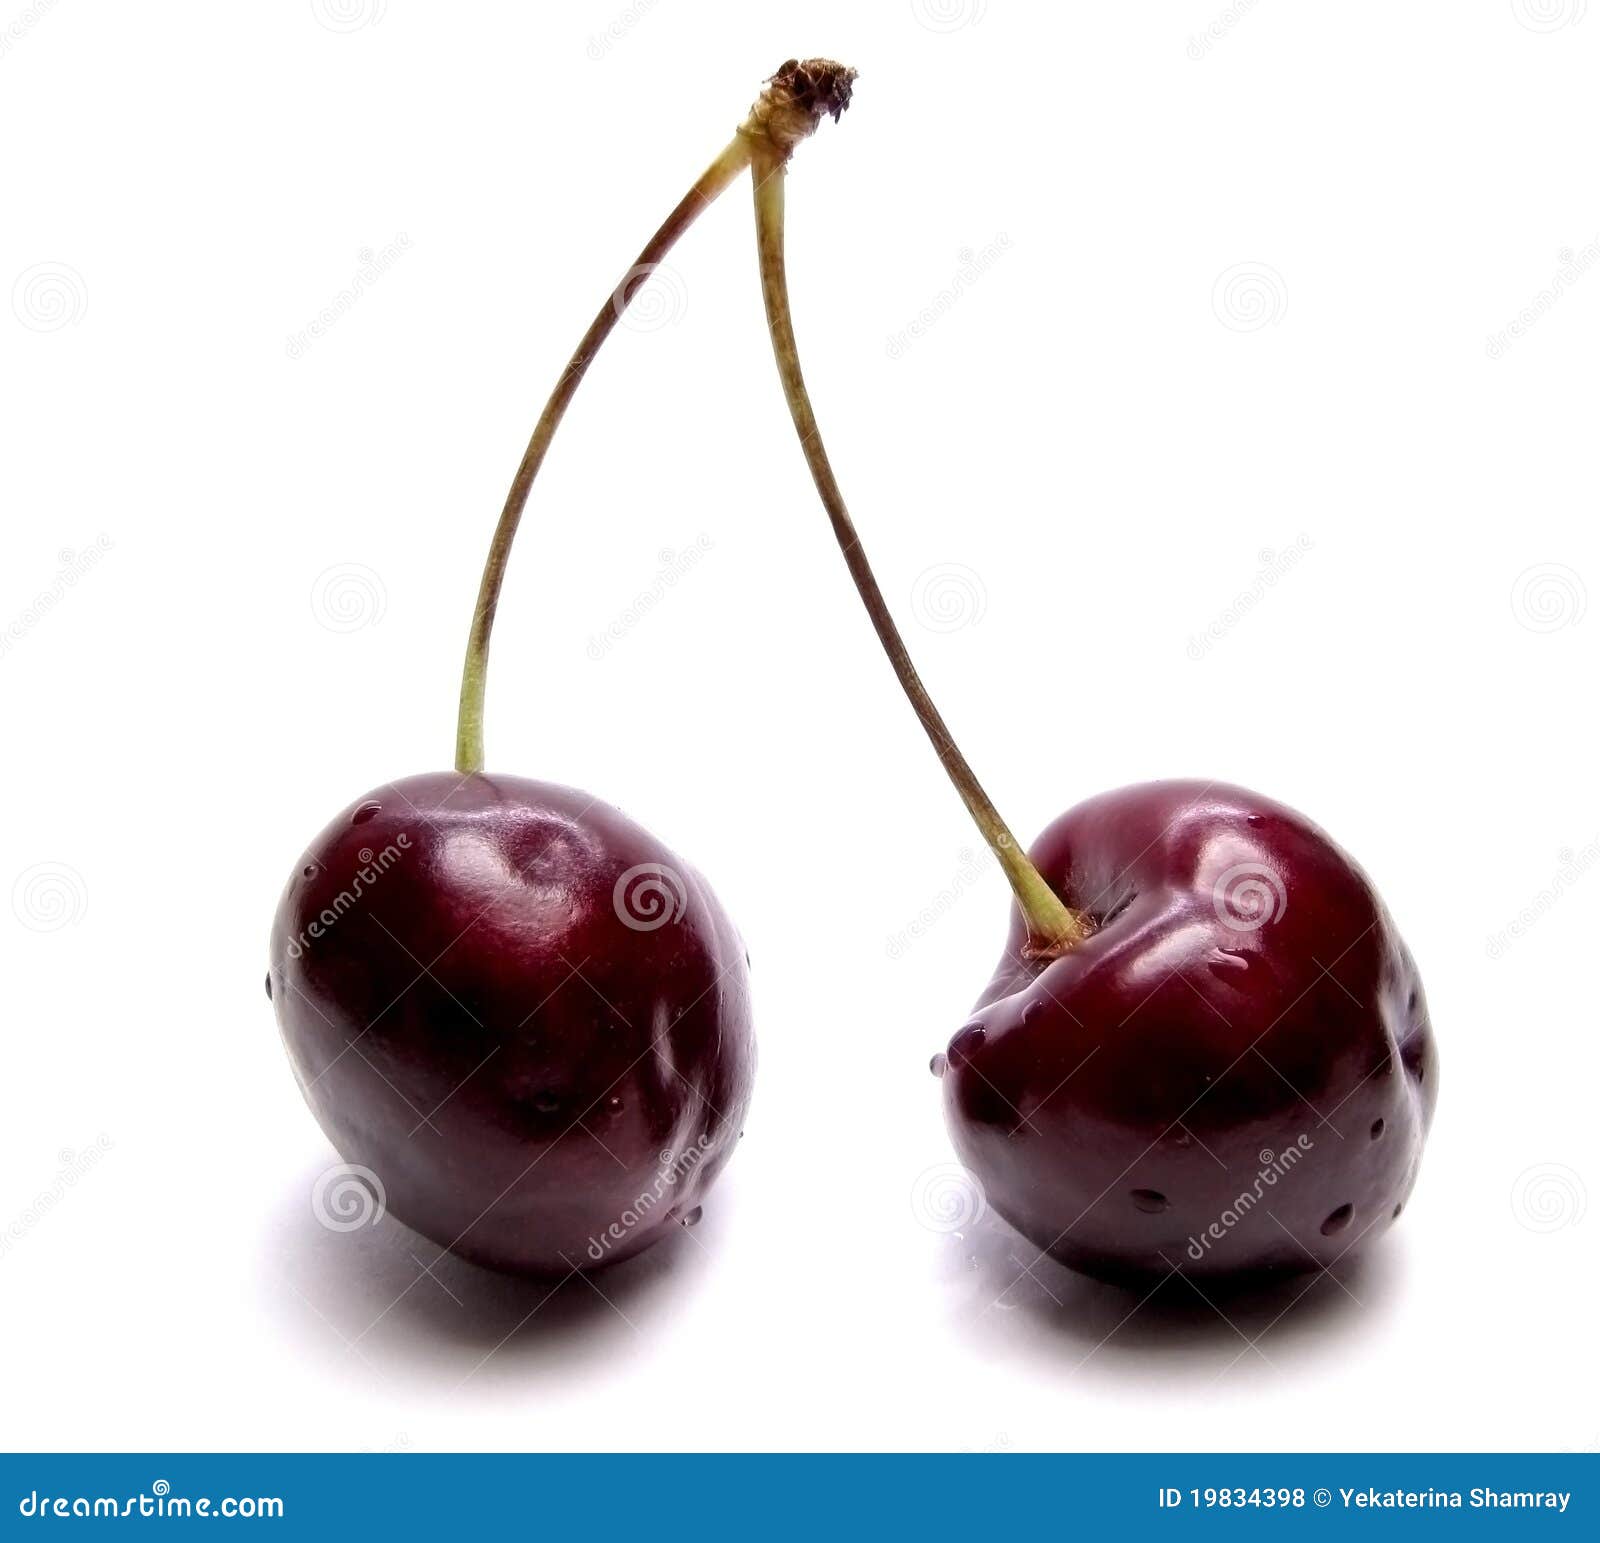 Two Cherries - a Sweet Kiss Stock Photo - Image of food, cherries: 19834398